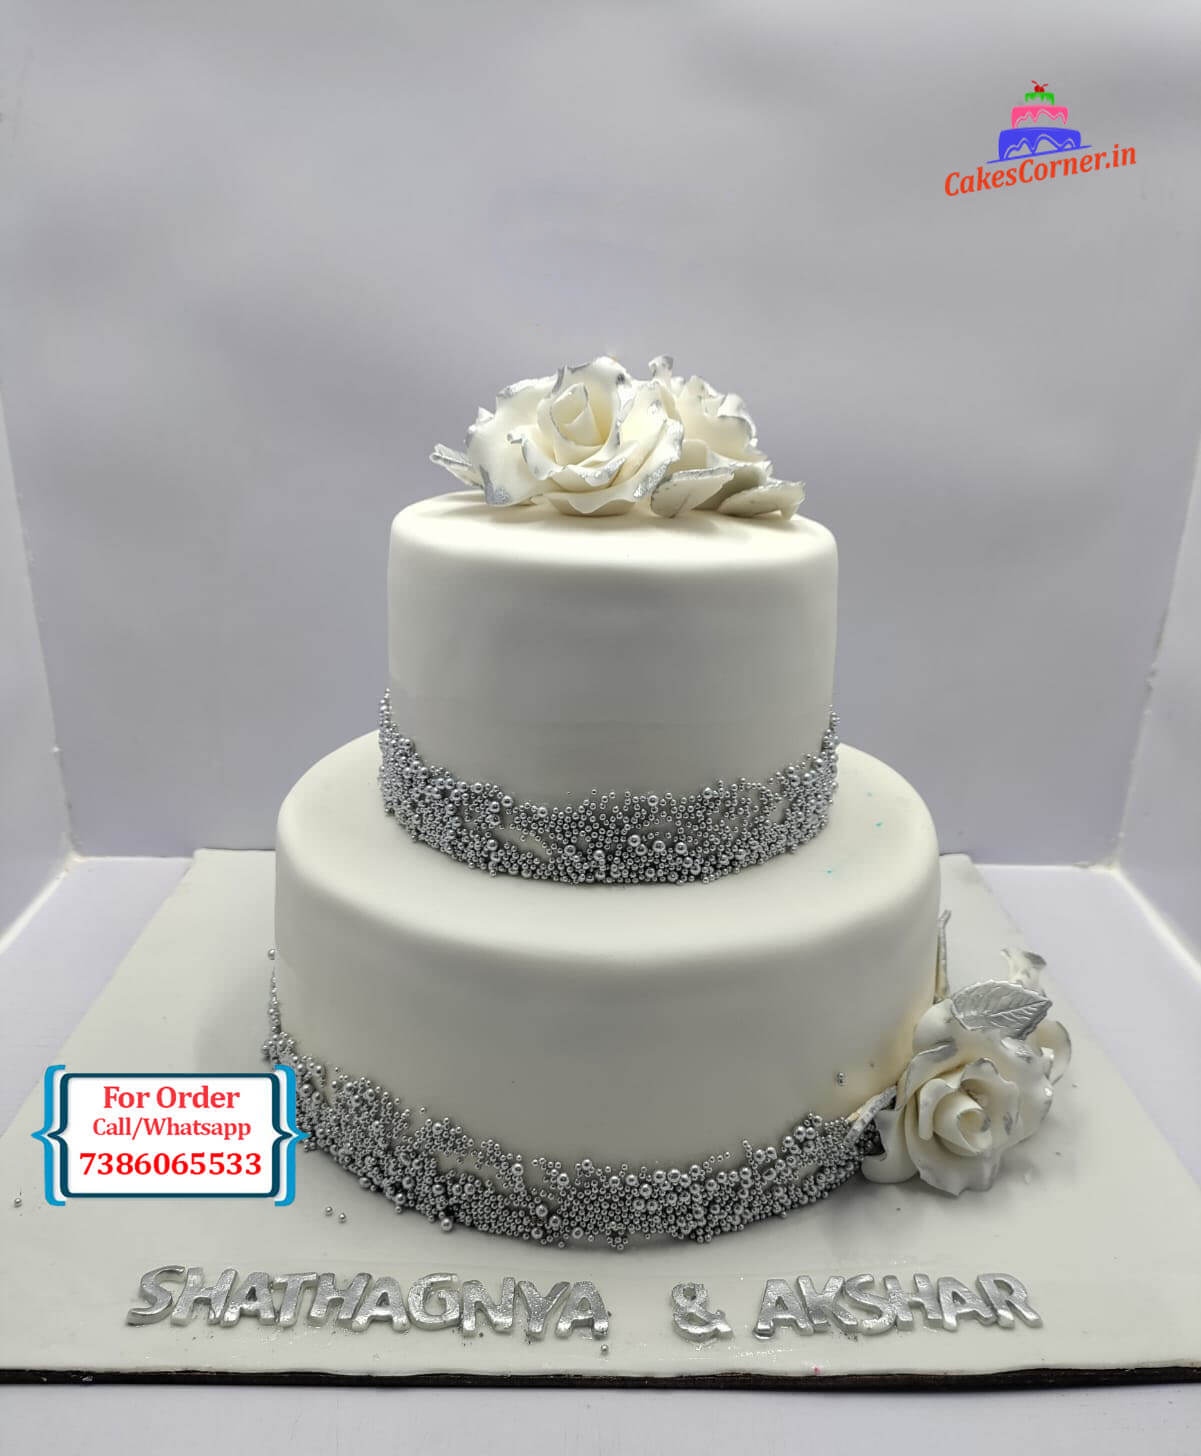 New WILTON 25TH Wedding Anniversary Cake topper in Silver | eBay